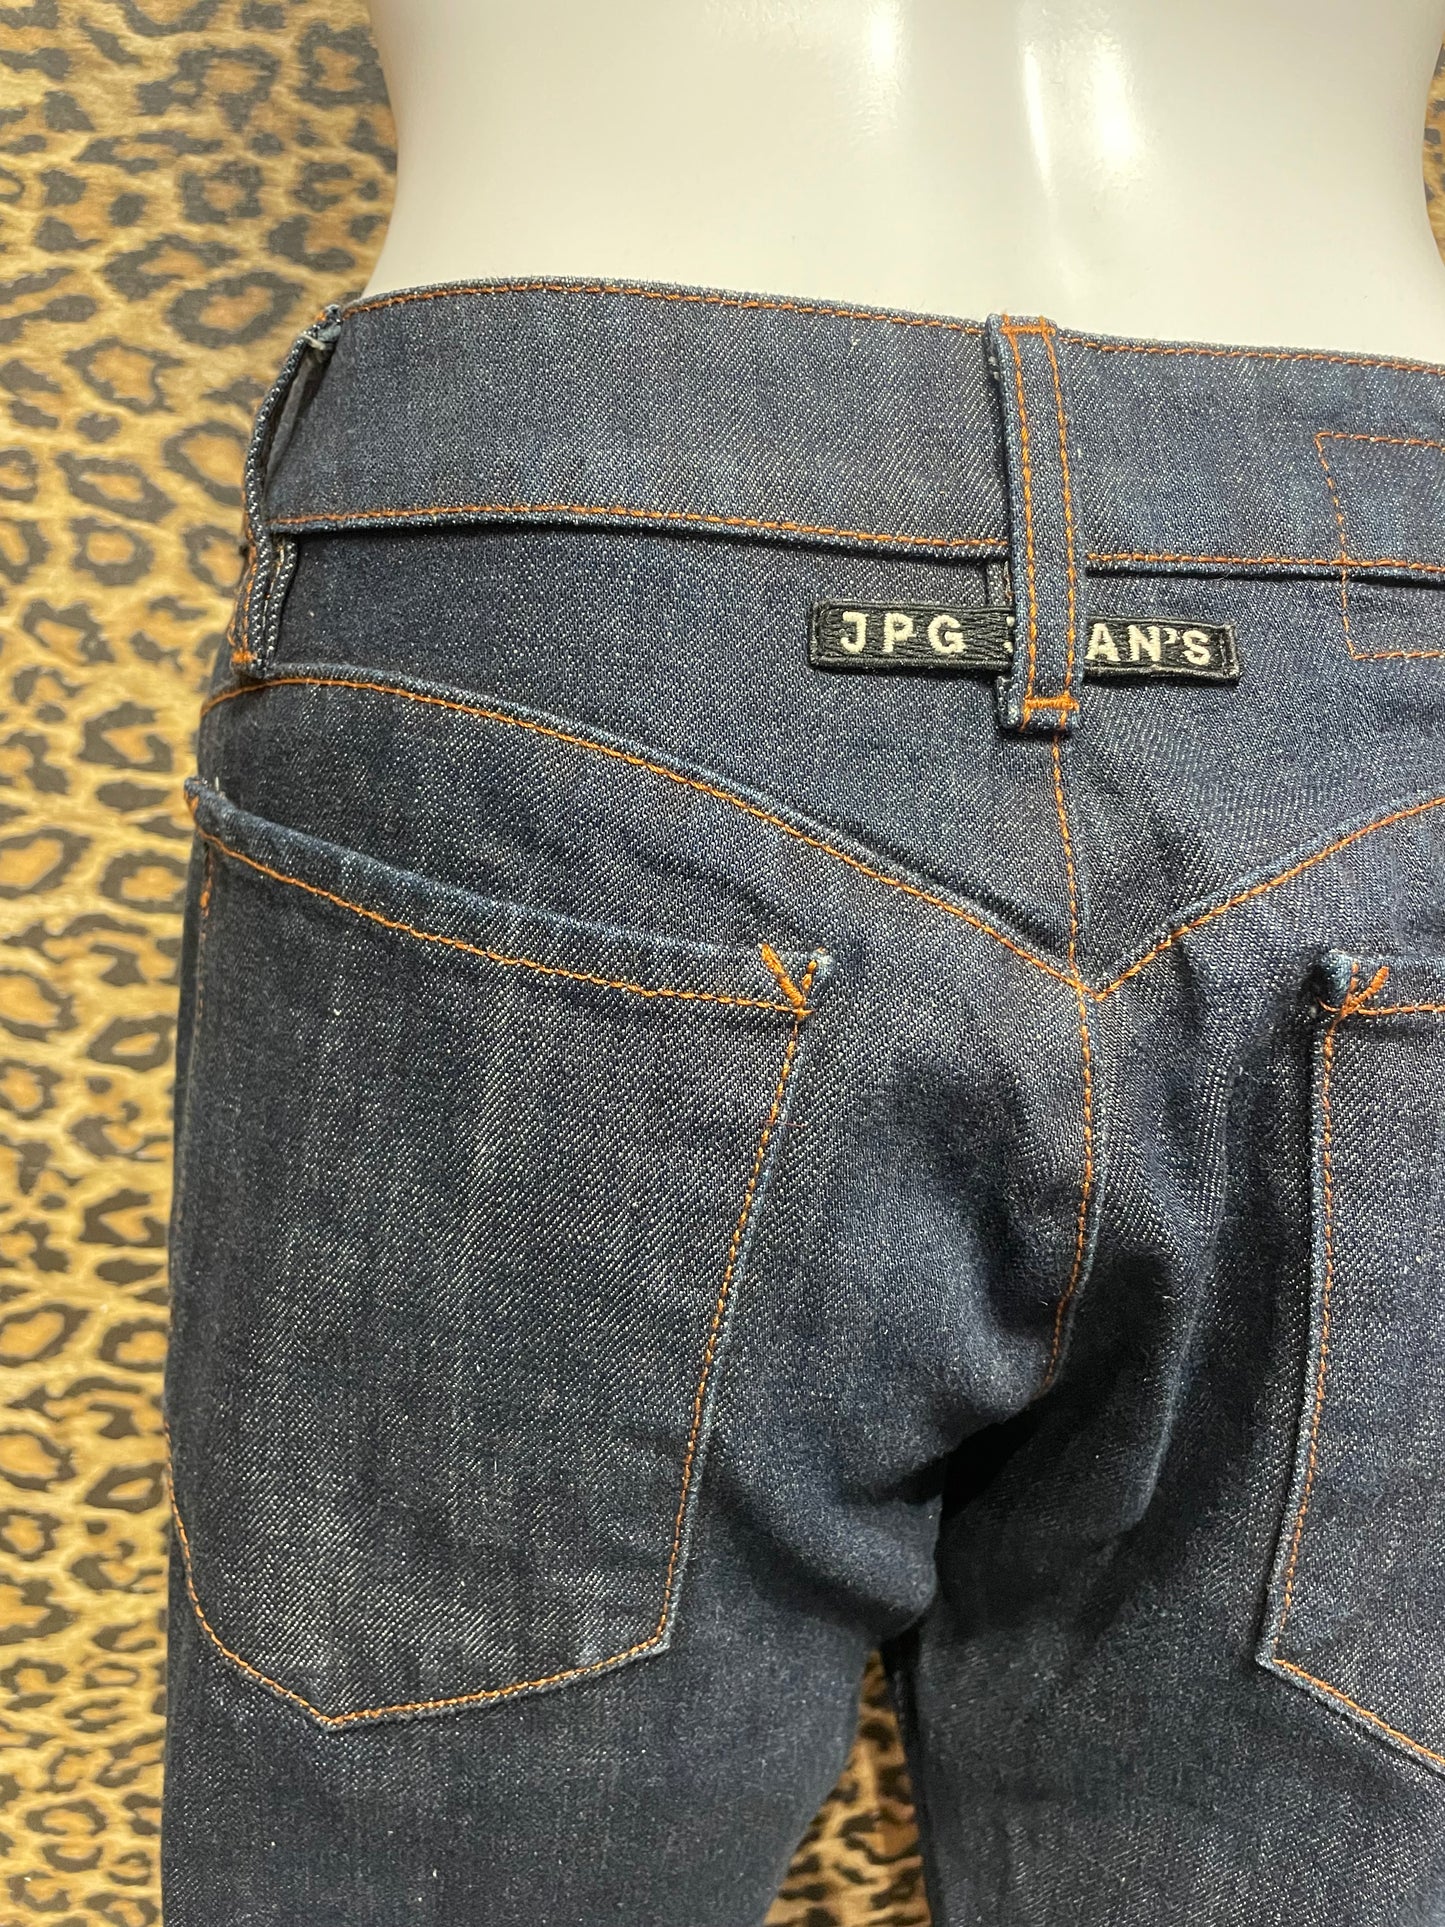 JPG Jeans Cutout Pocket Flared Denim